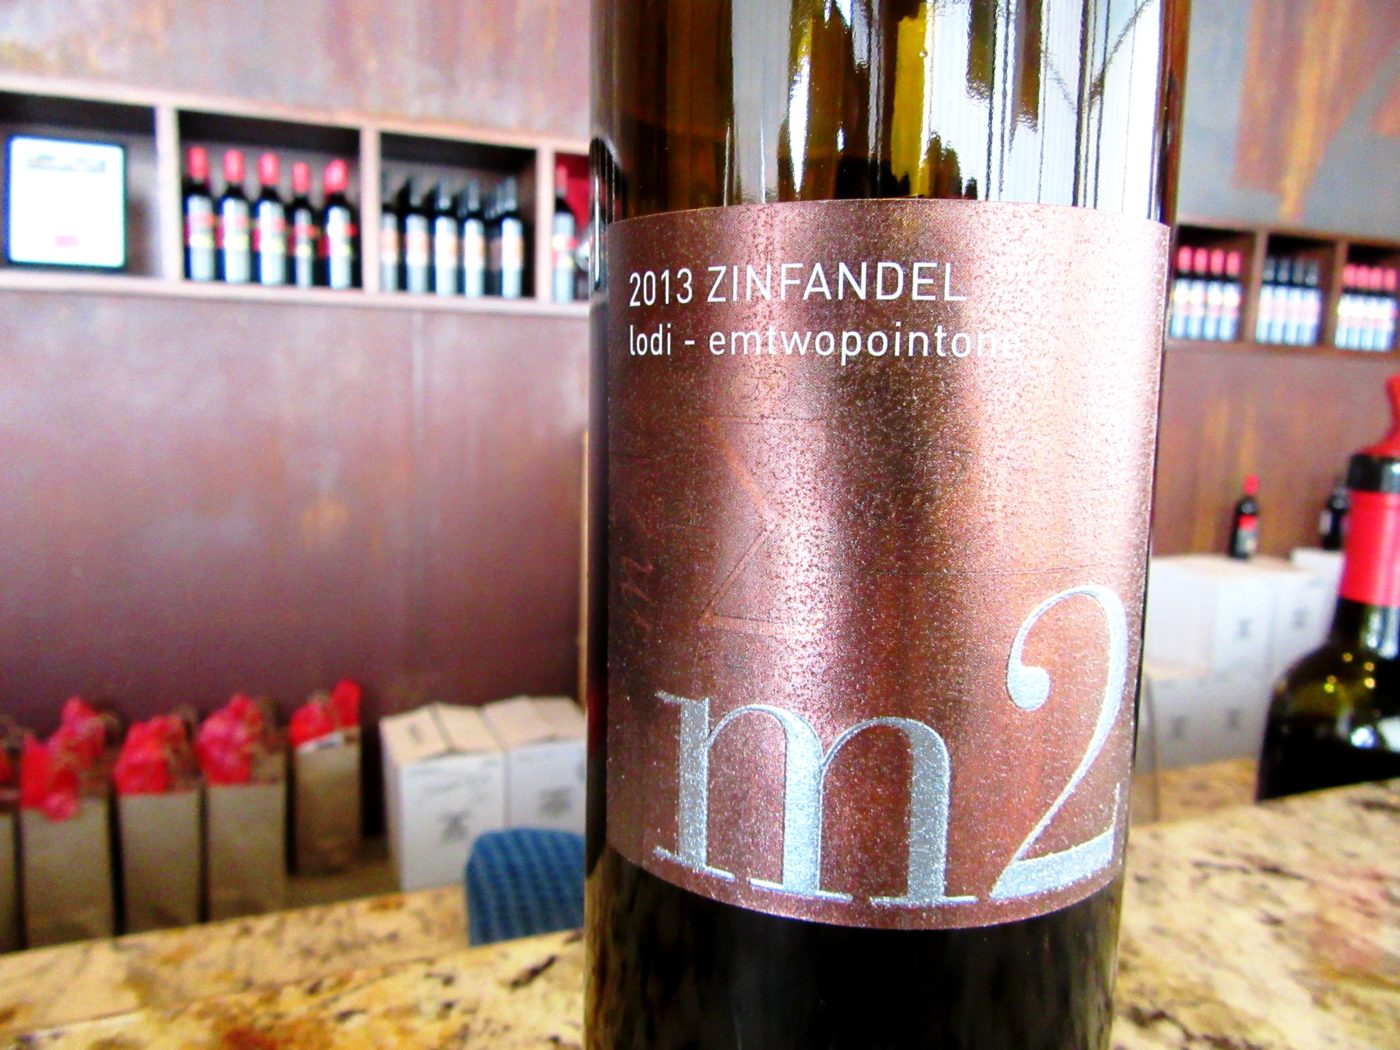 M2 Wines, Zinfandel 2013, Emtwopointone, Lodi, California, Wine Casual